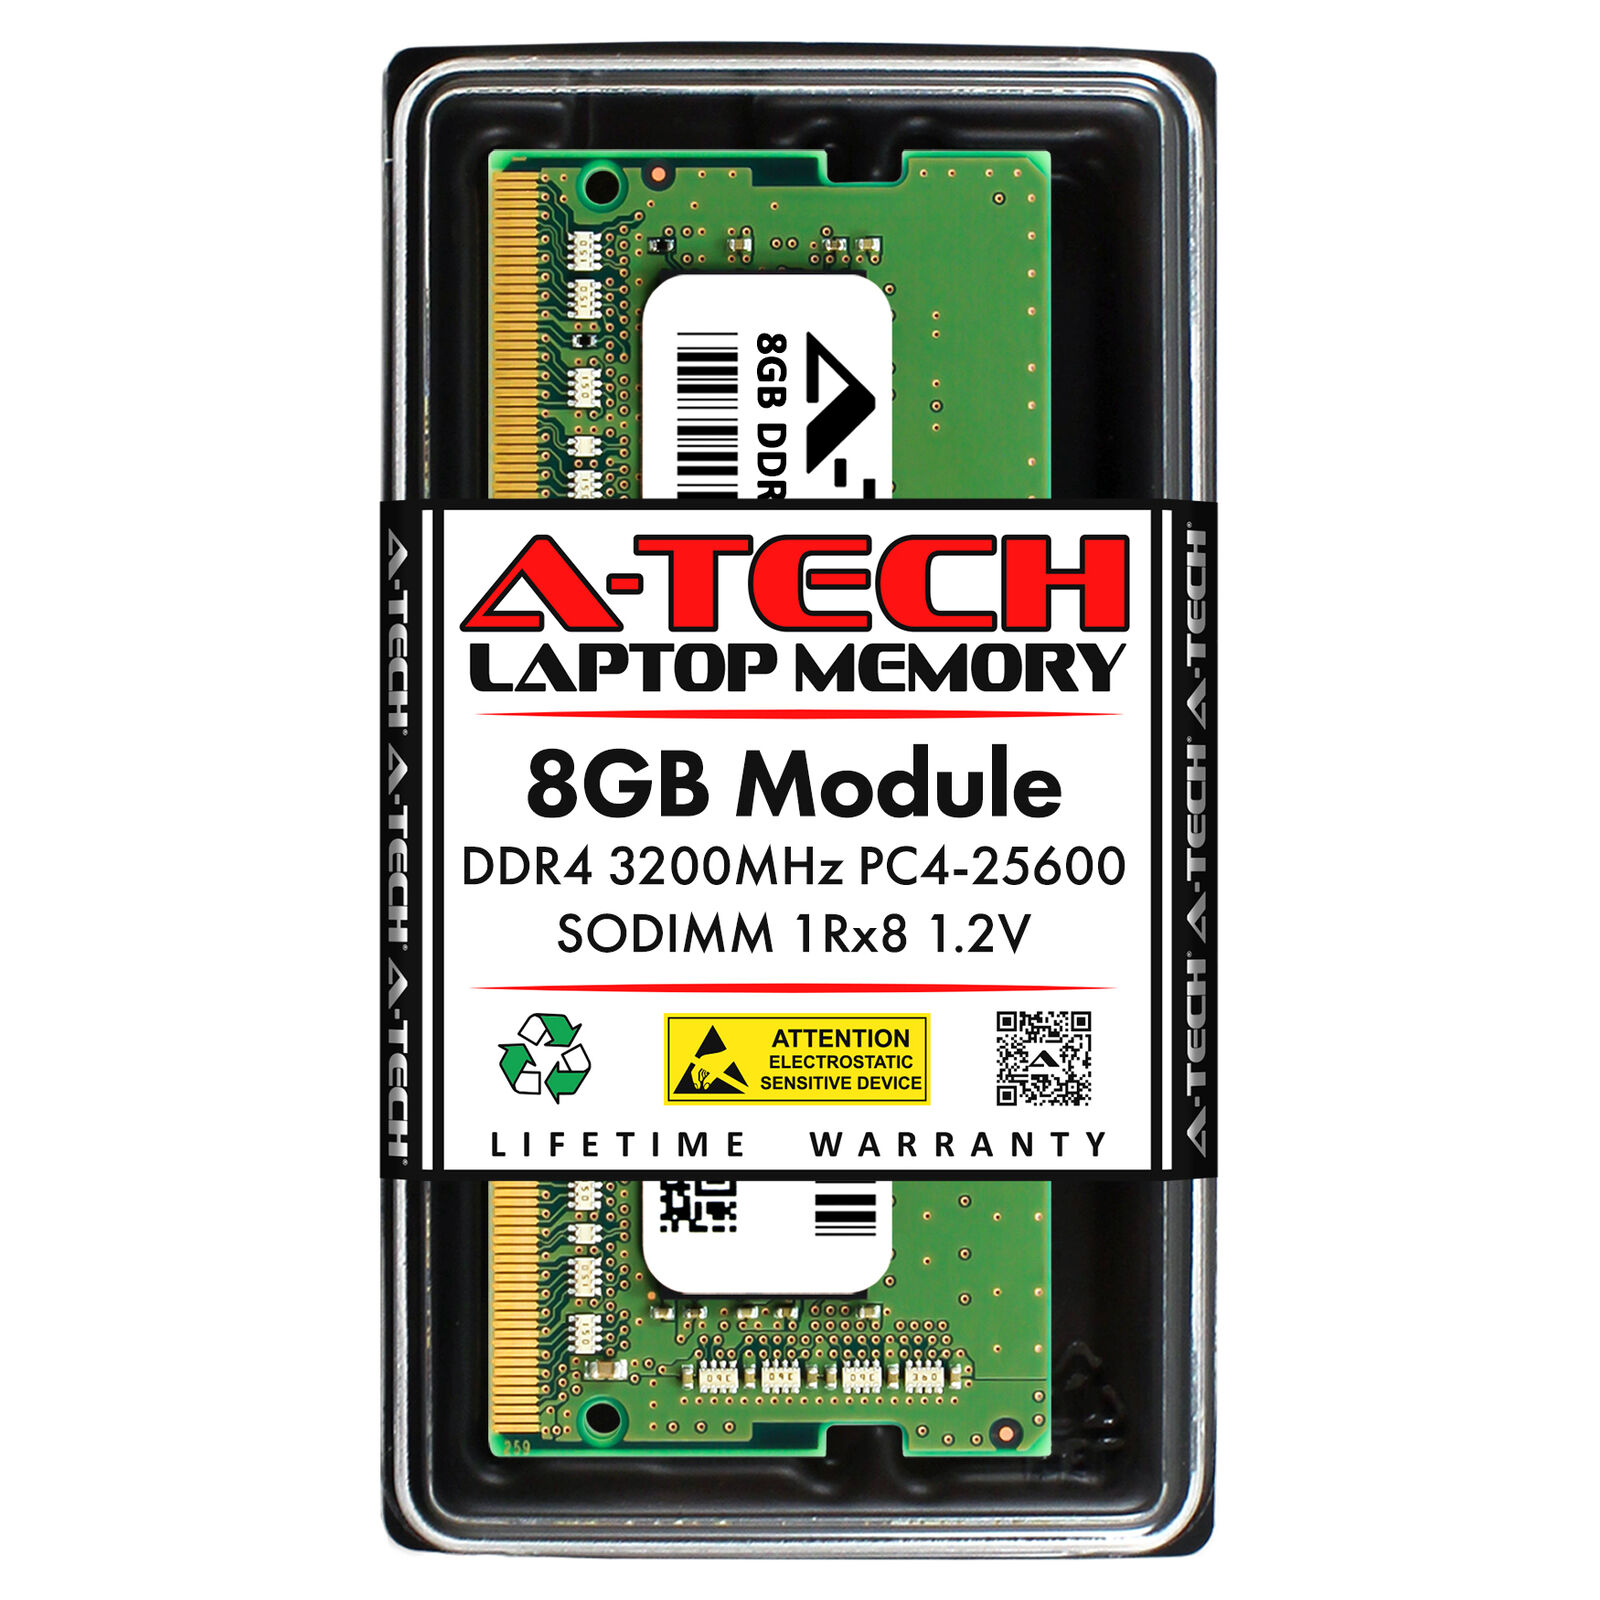 8GB PC4-25600 SODIMM Memory RAM for Dell Inspiron 5400 AIO (AA937595 Equivalent)